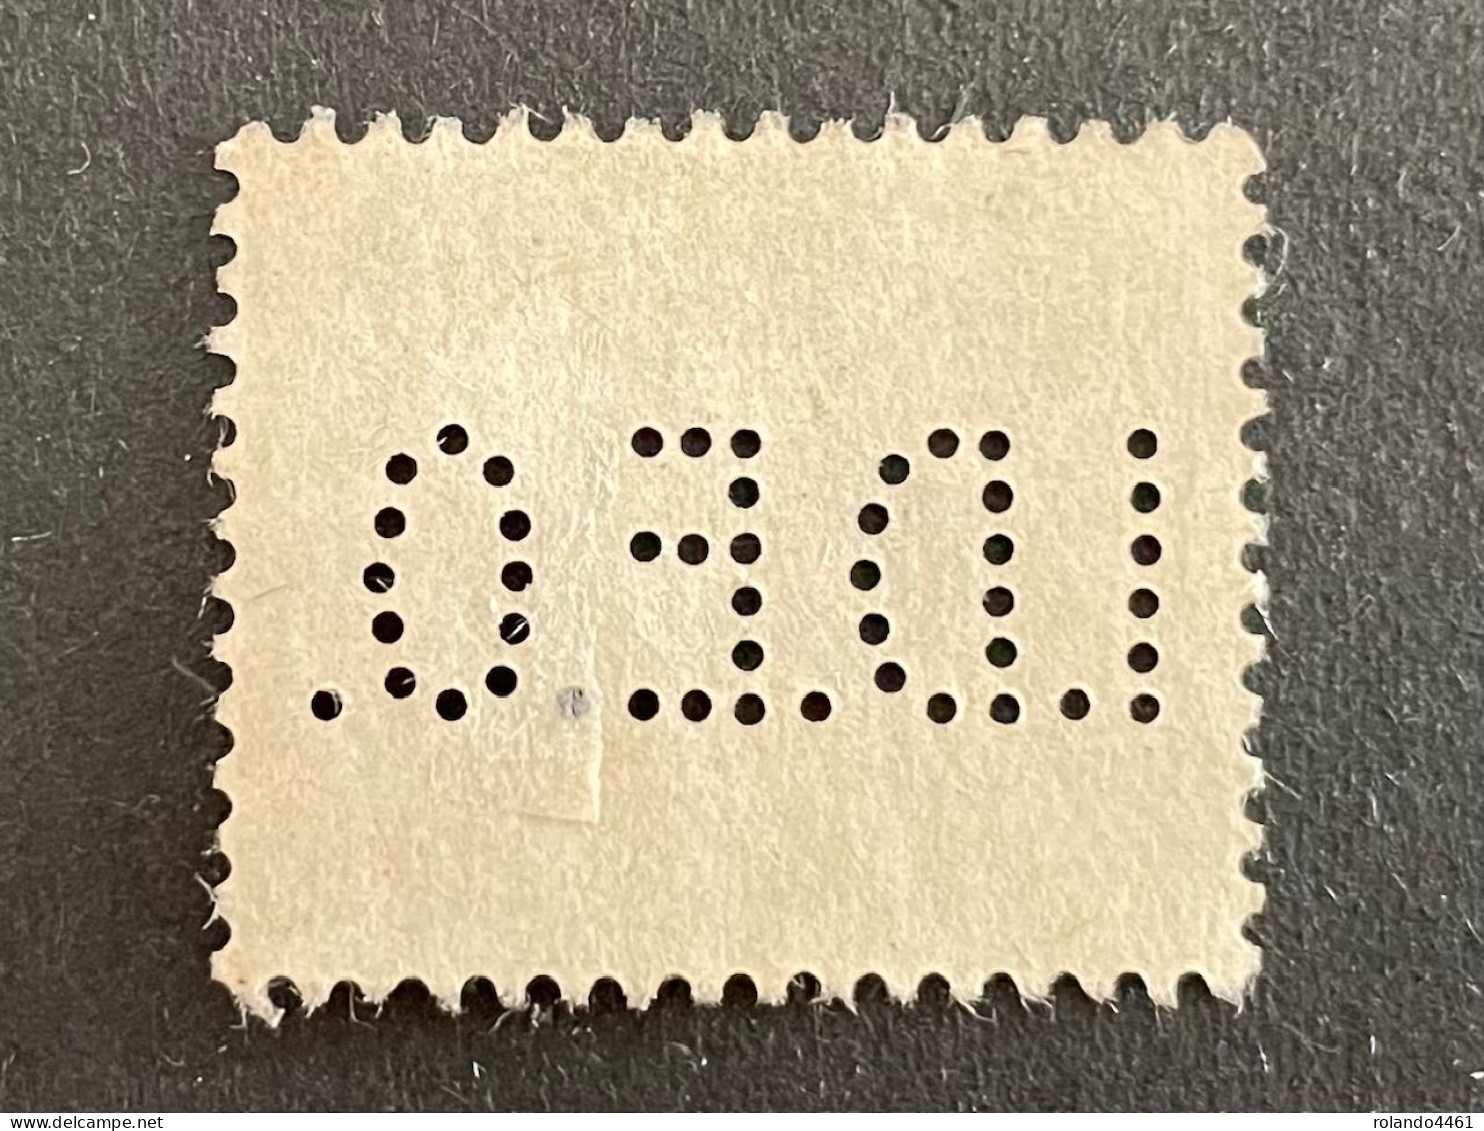 Colonie Bureau Indochine N° 103 I.D.E.O. Indice 6 Perforé Perforés Perfins Perfin Superbe Et Rare !! - Used Stamps